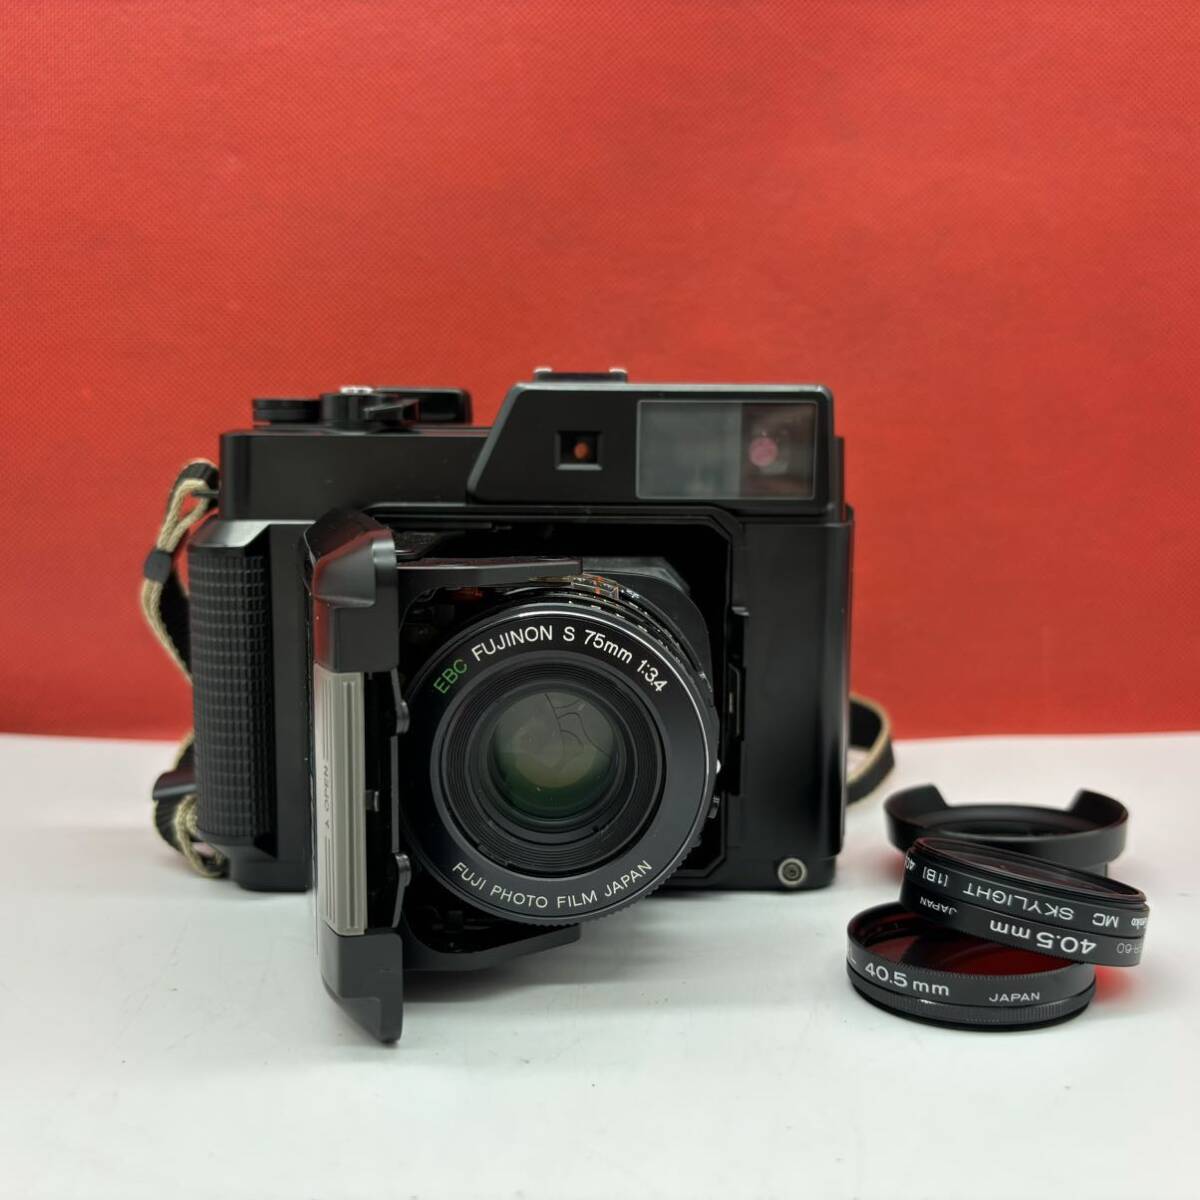 ◆ FUJICA GS645 Professional 中判カメラ フィルムカメラ EBC FUJINON S 75mm F3.4 動作確認済 フジカ 富士フイルムの画像1